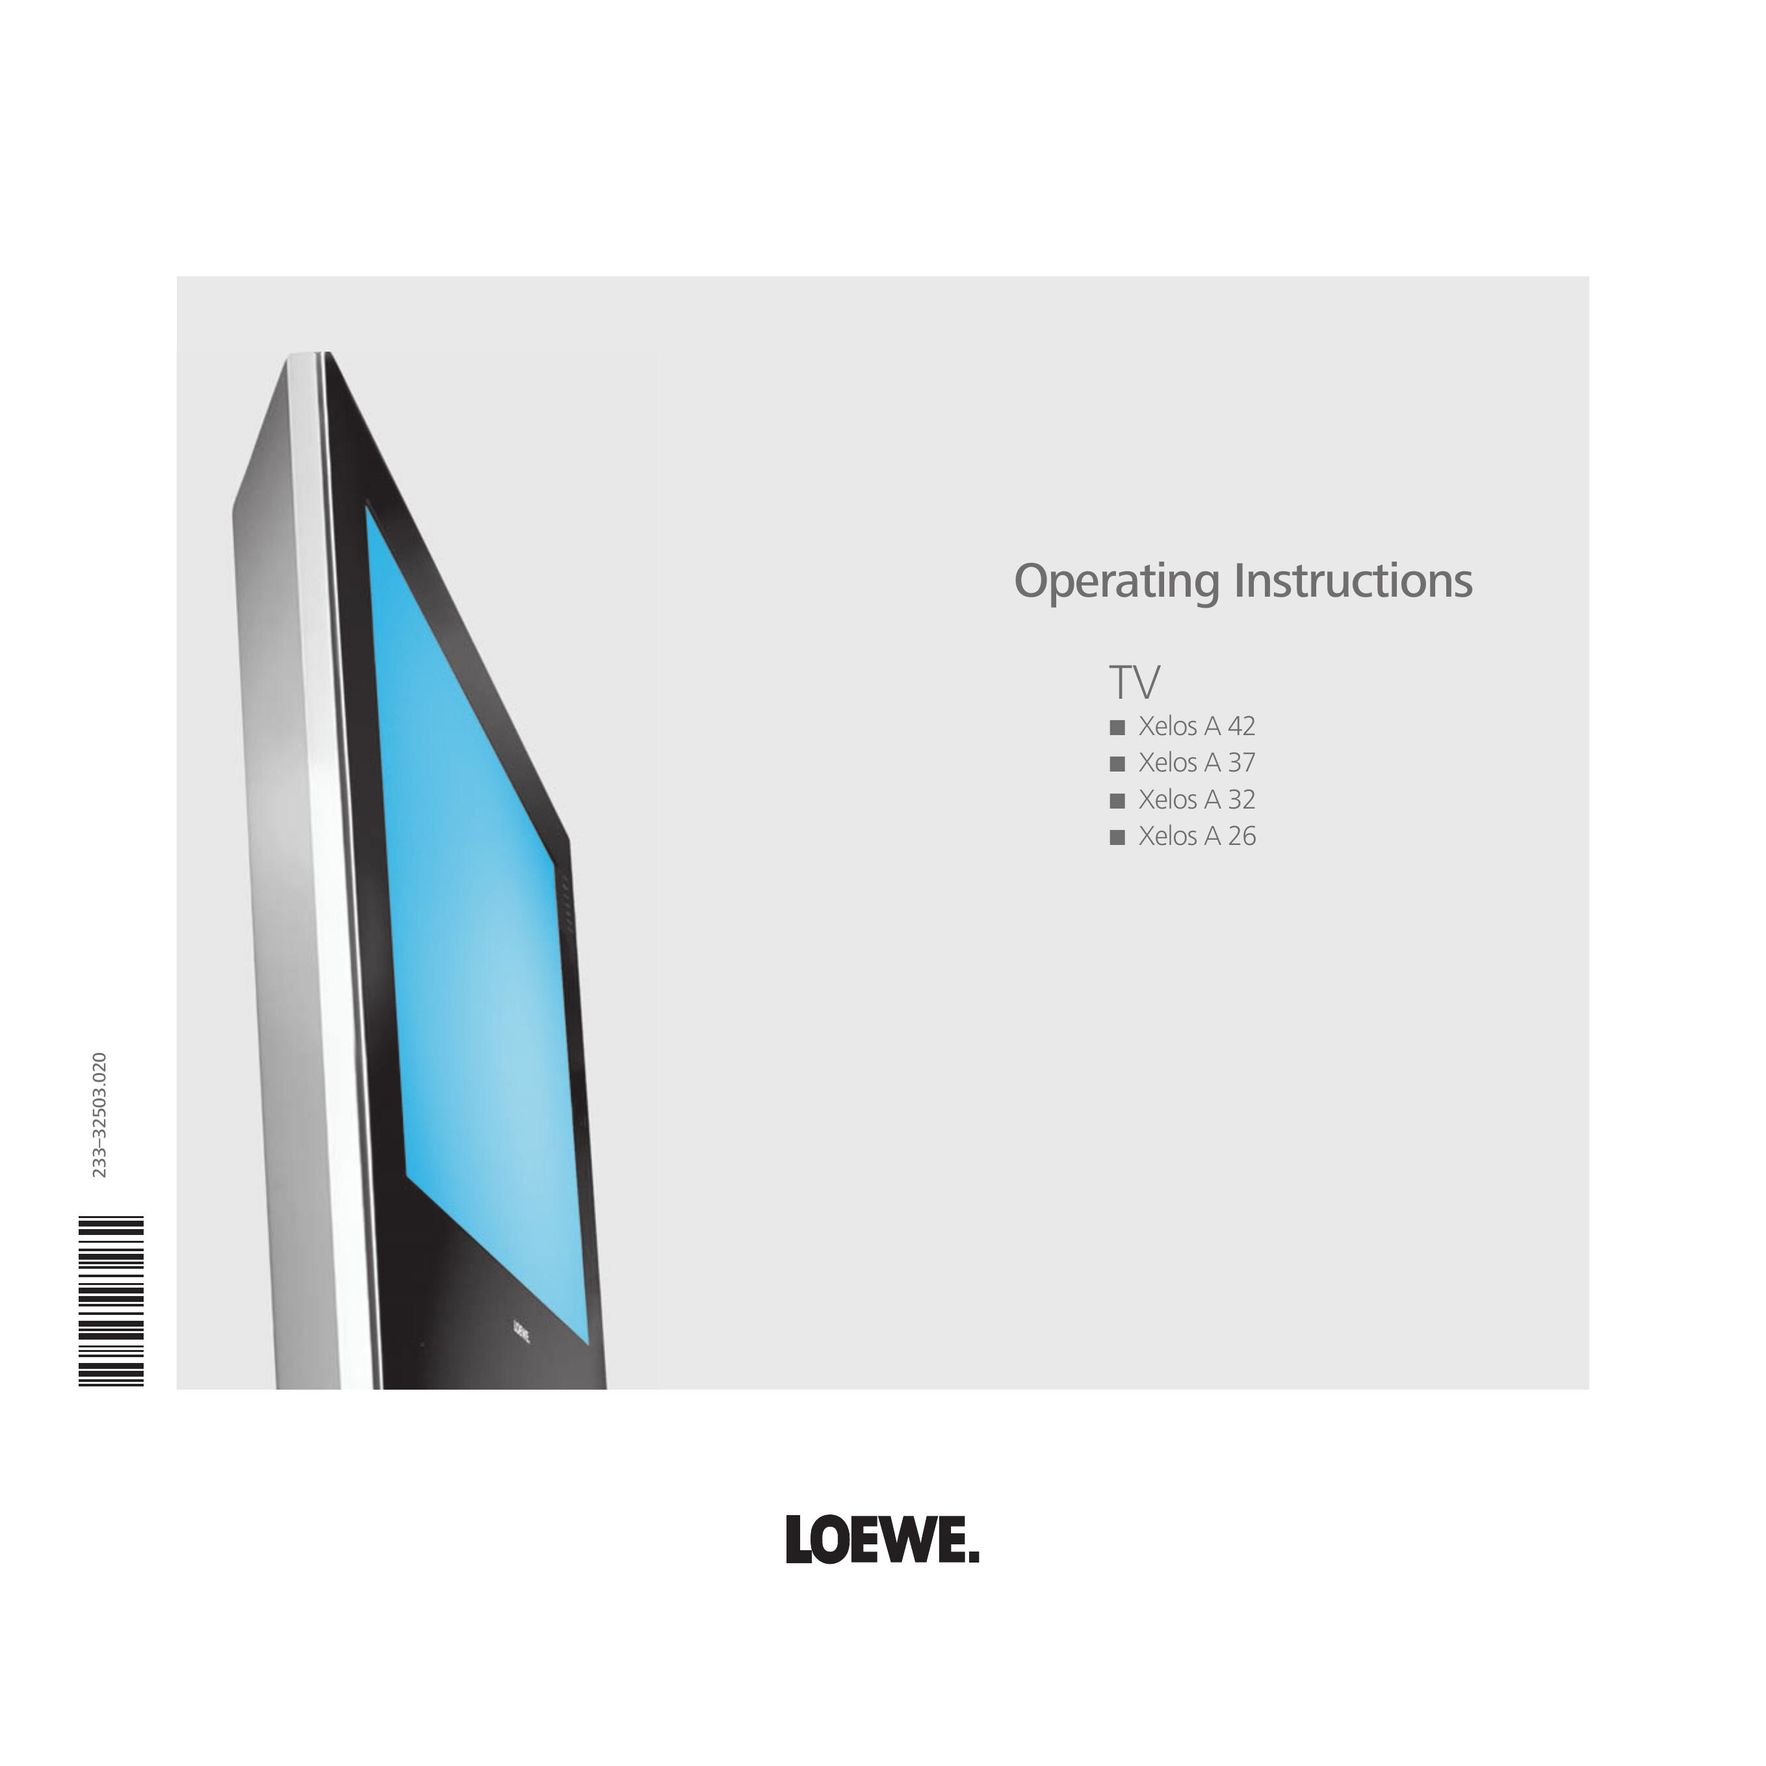 Loewe A 32 Flat Panel Television User Manual